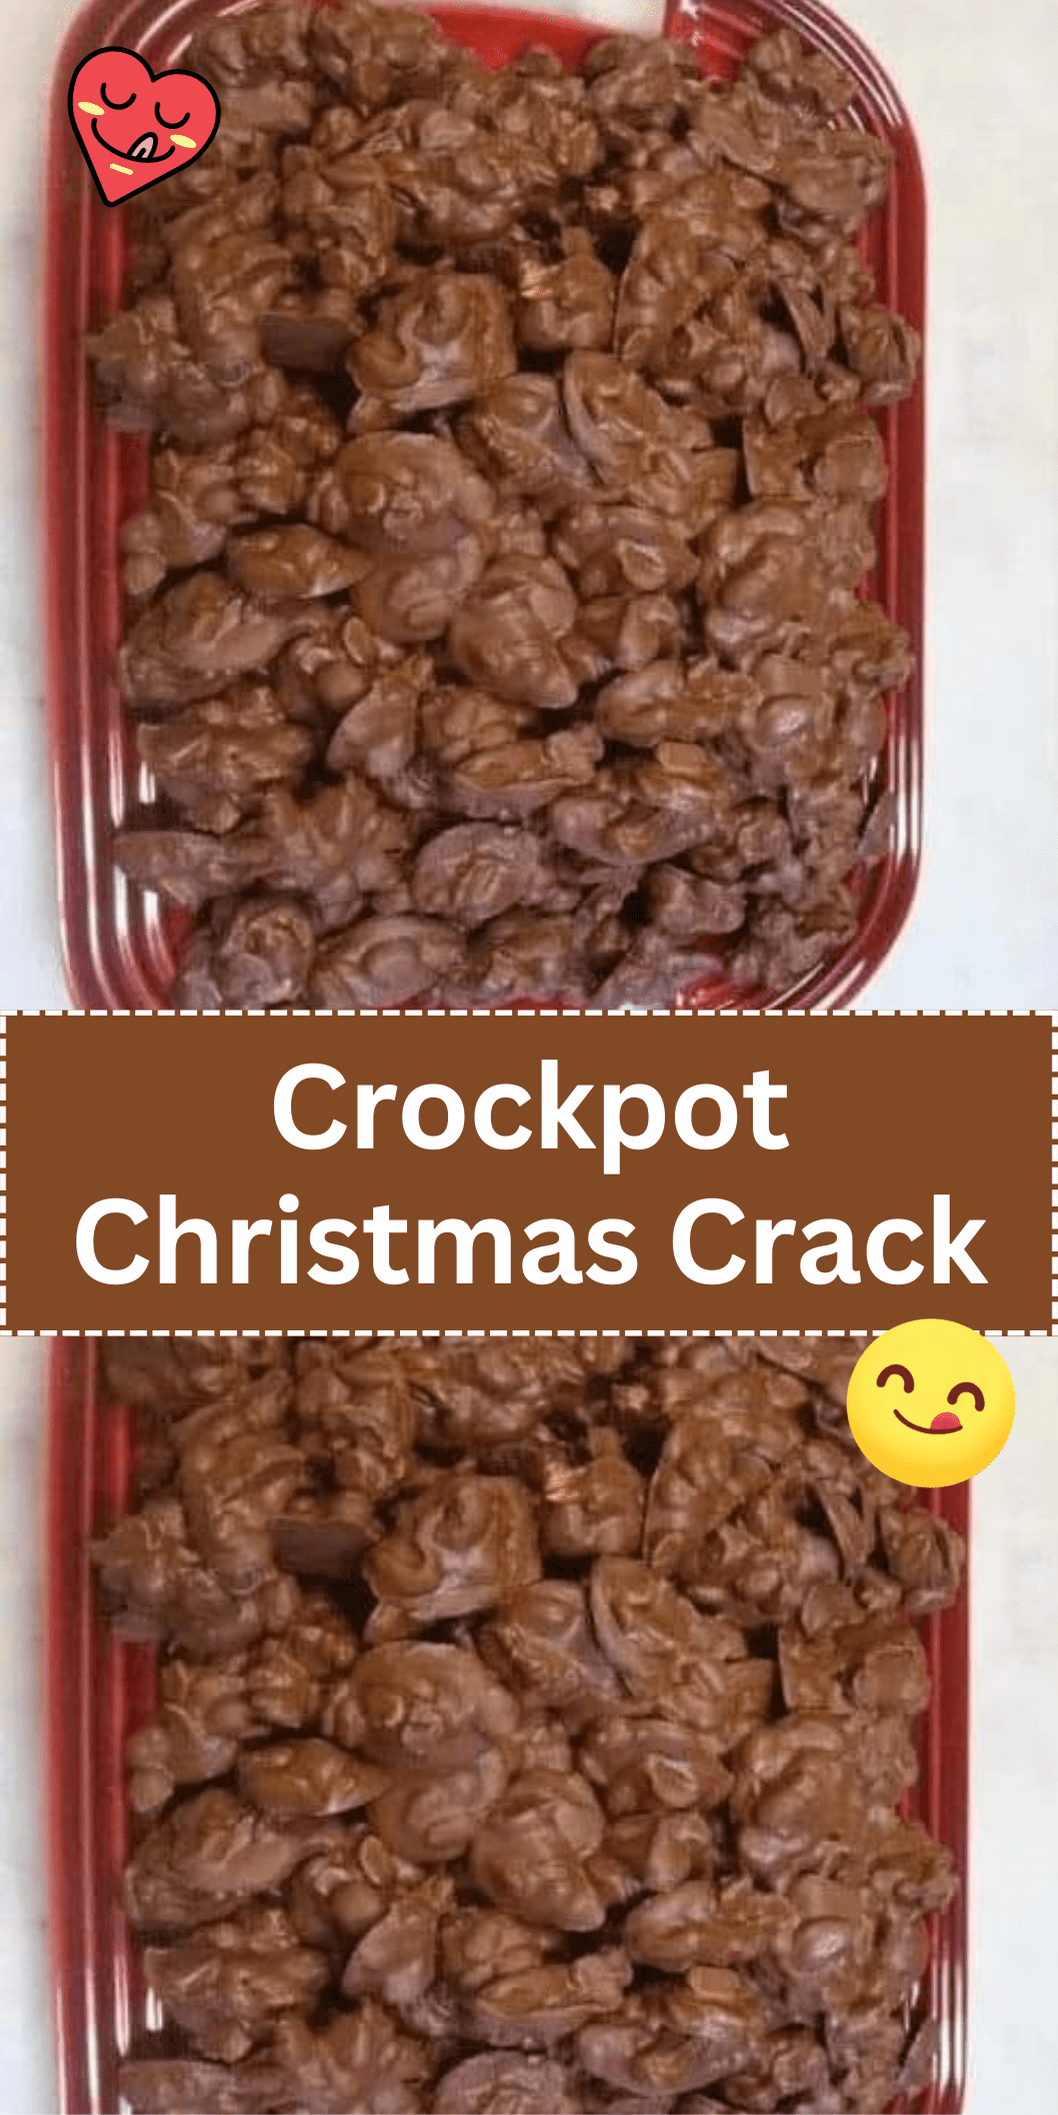 Crockpot Christmas Crack